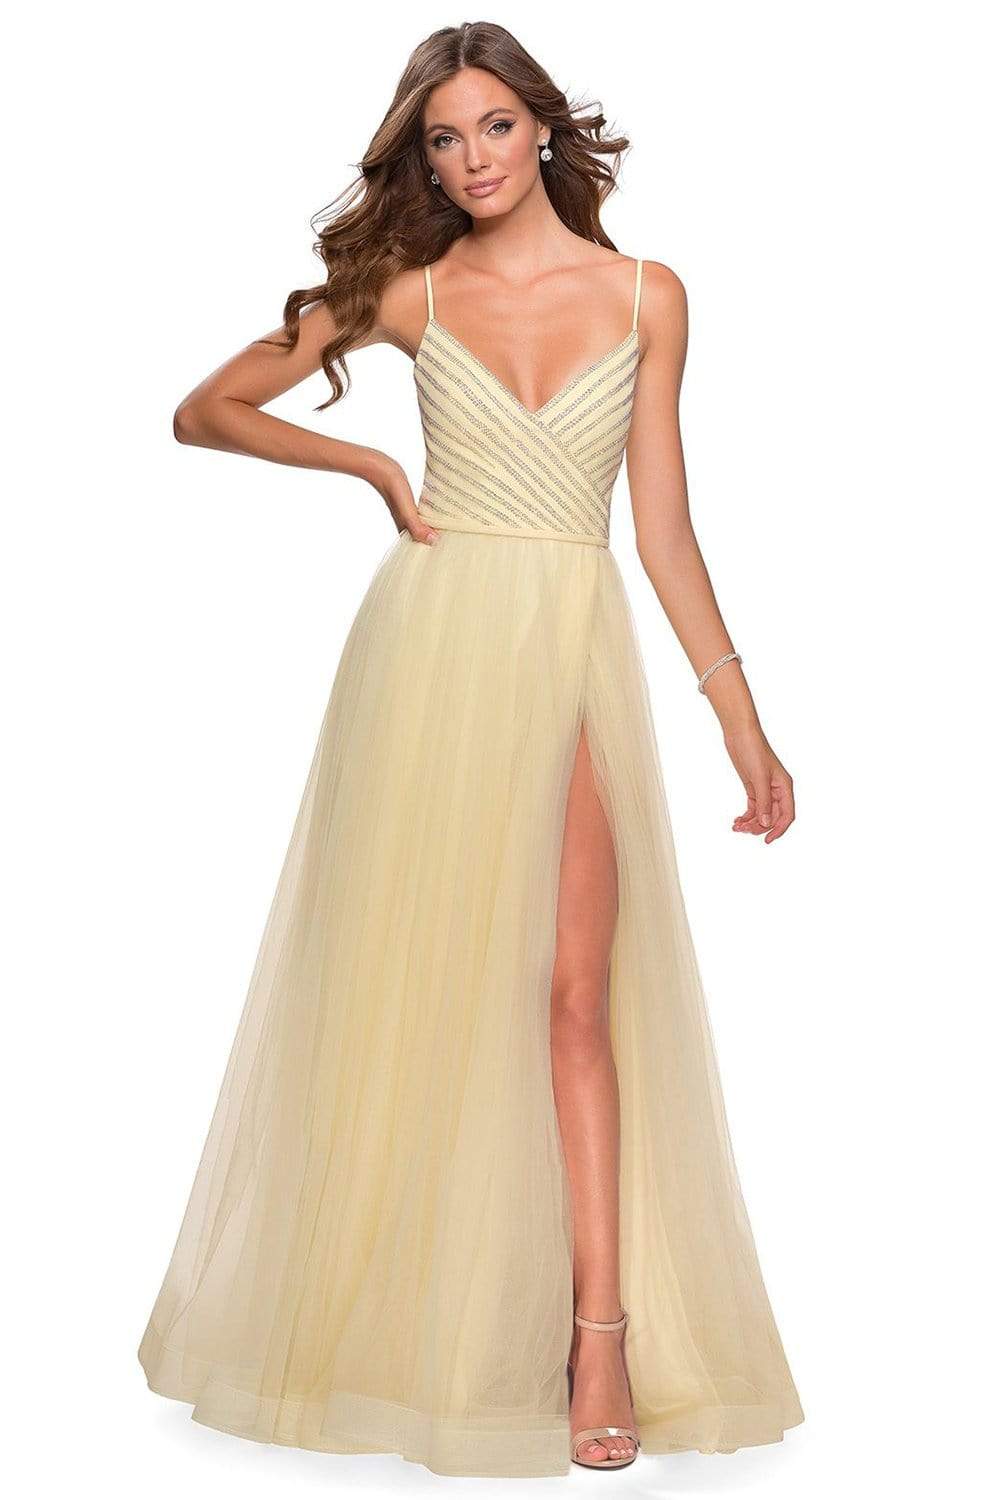 Image of La Femme - 28511 Asymmetric Rhinestone Beadings Tulle Prom Dress